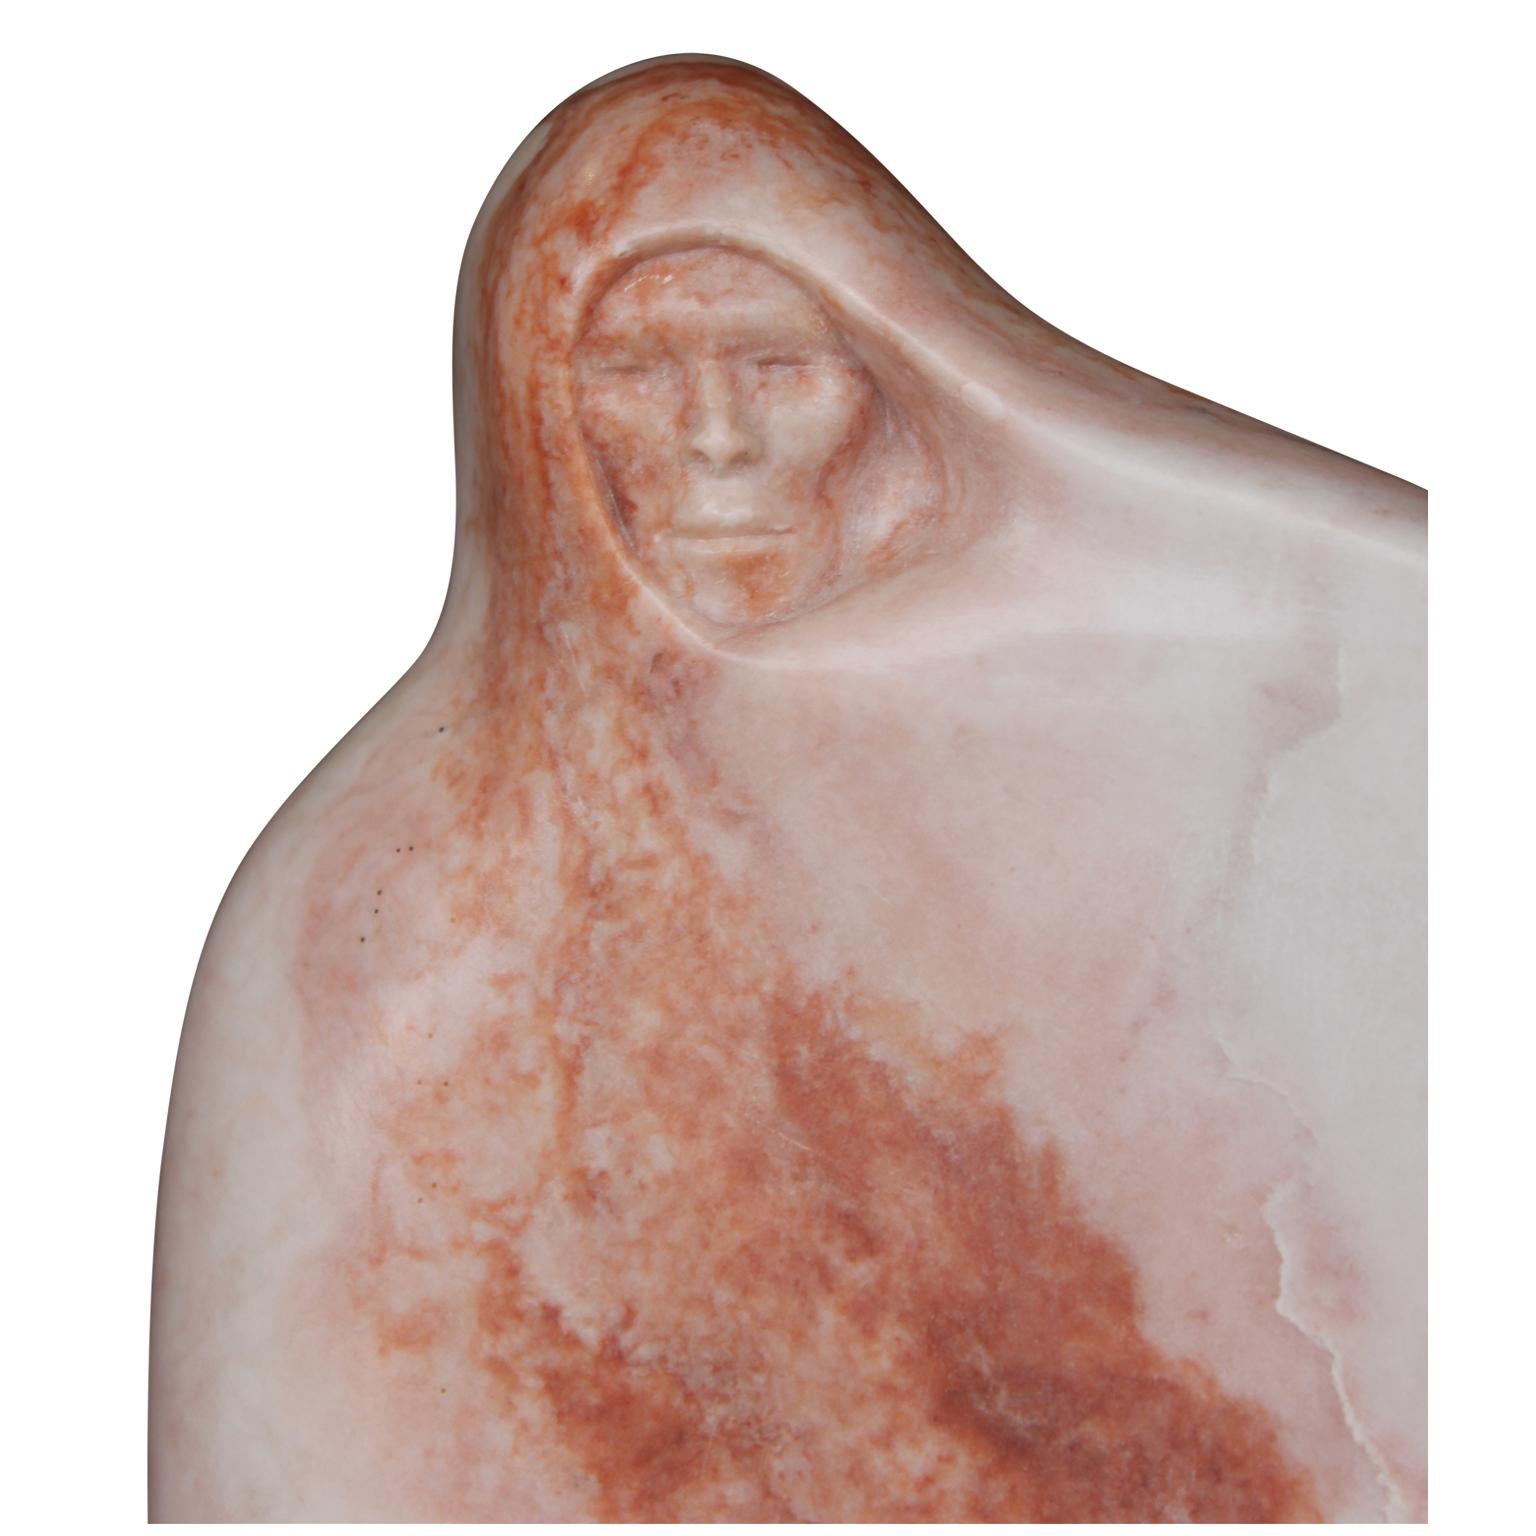 hooded figure statue